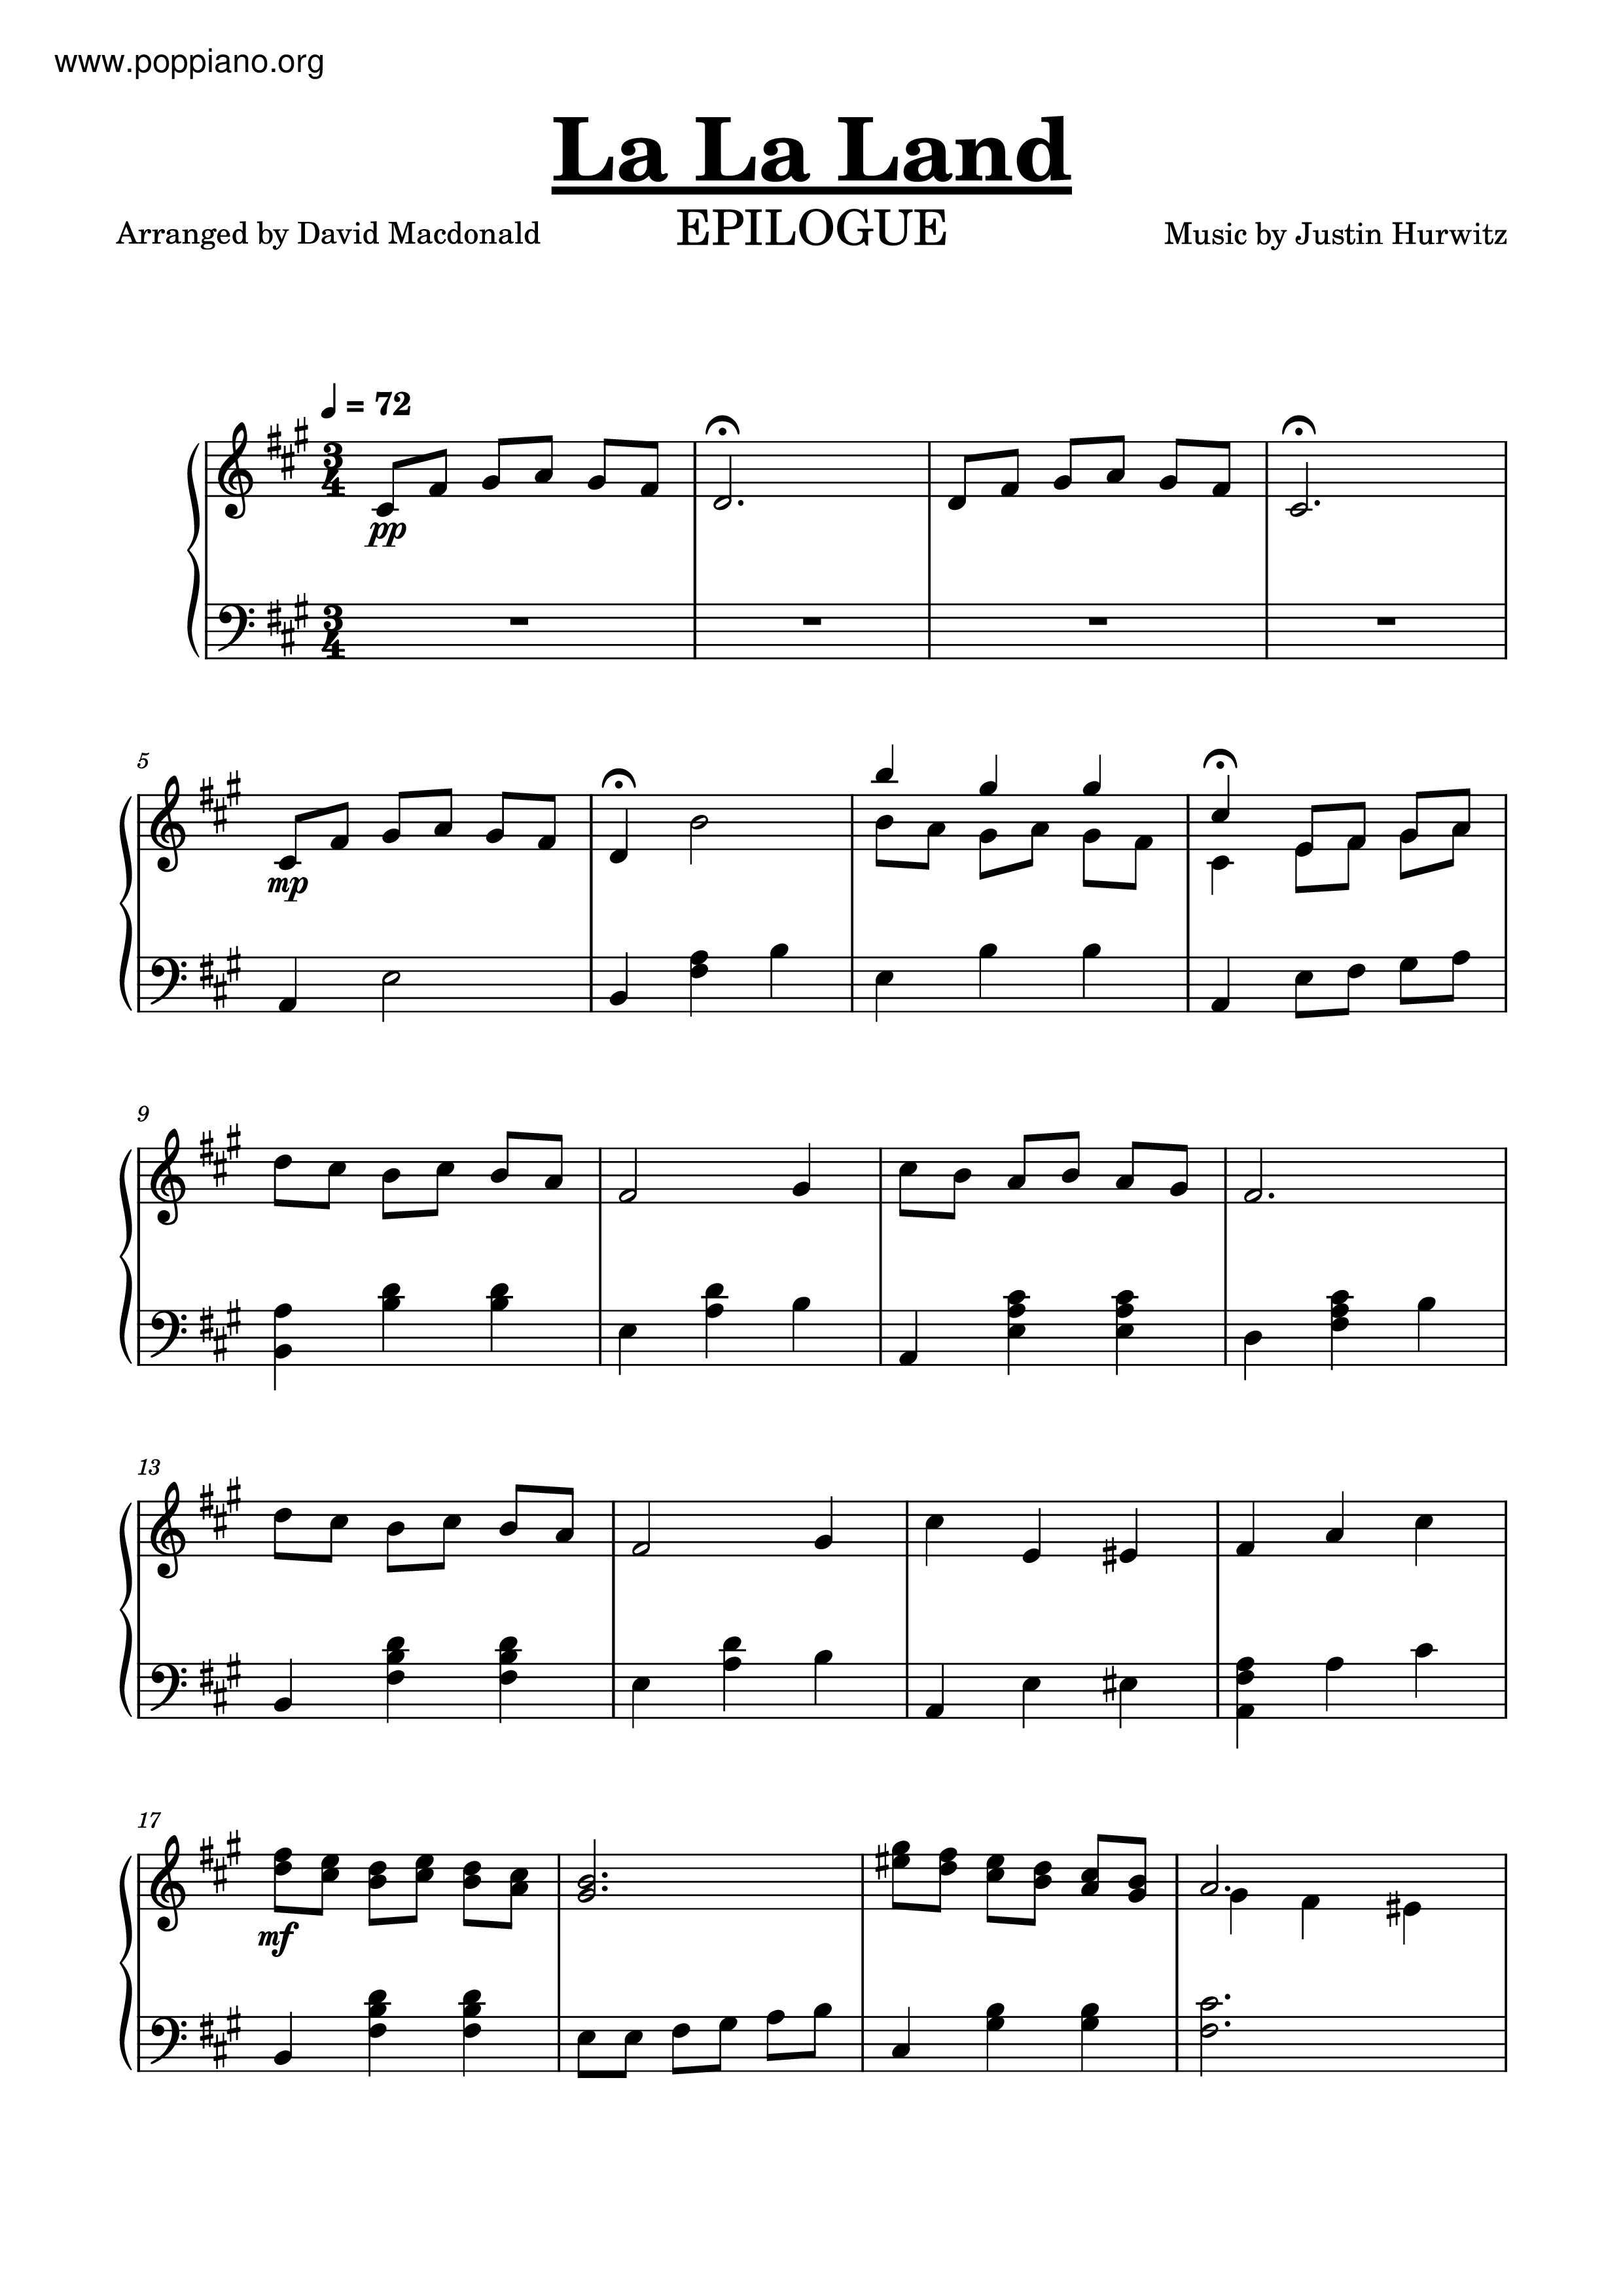 La La Land-Epilogue Score